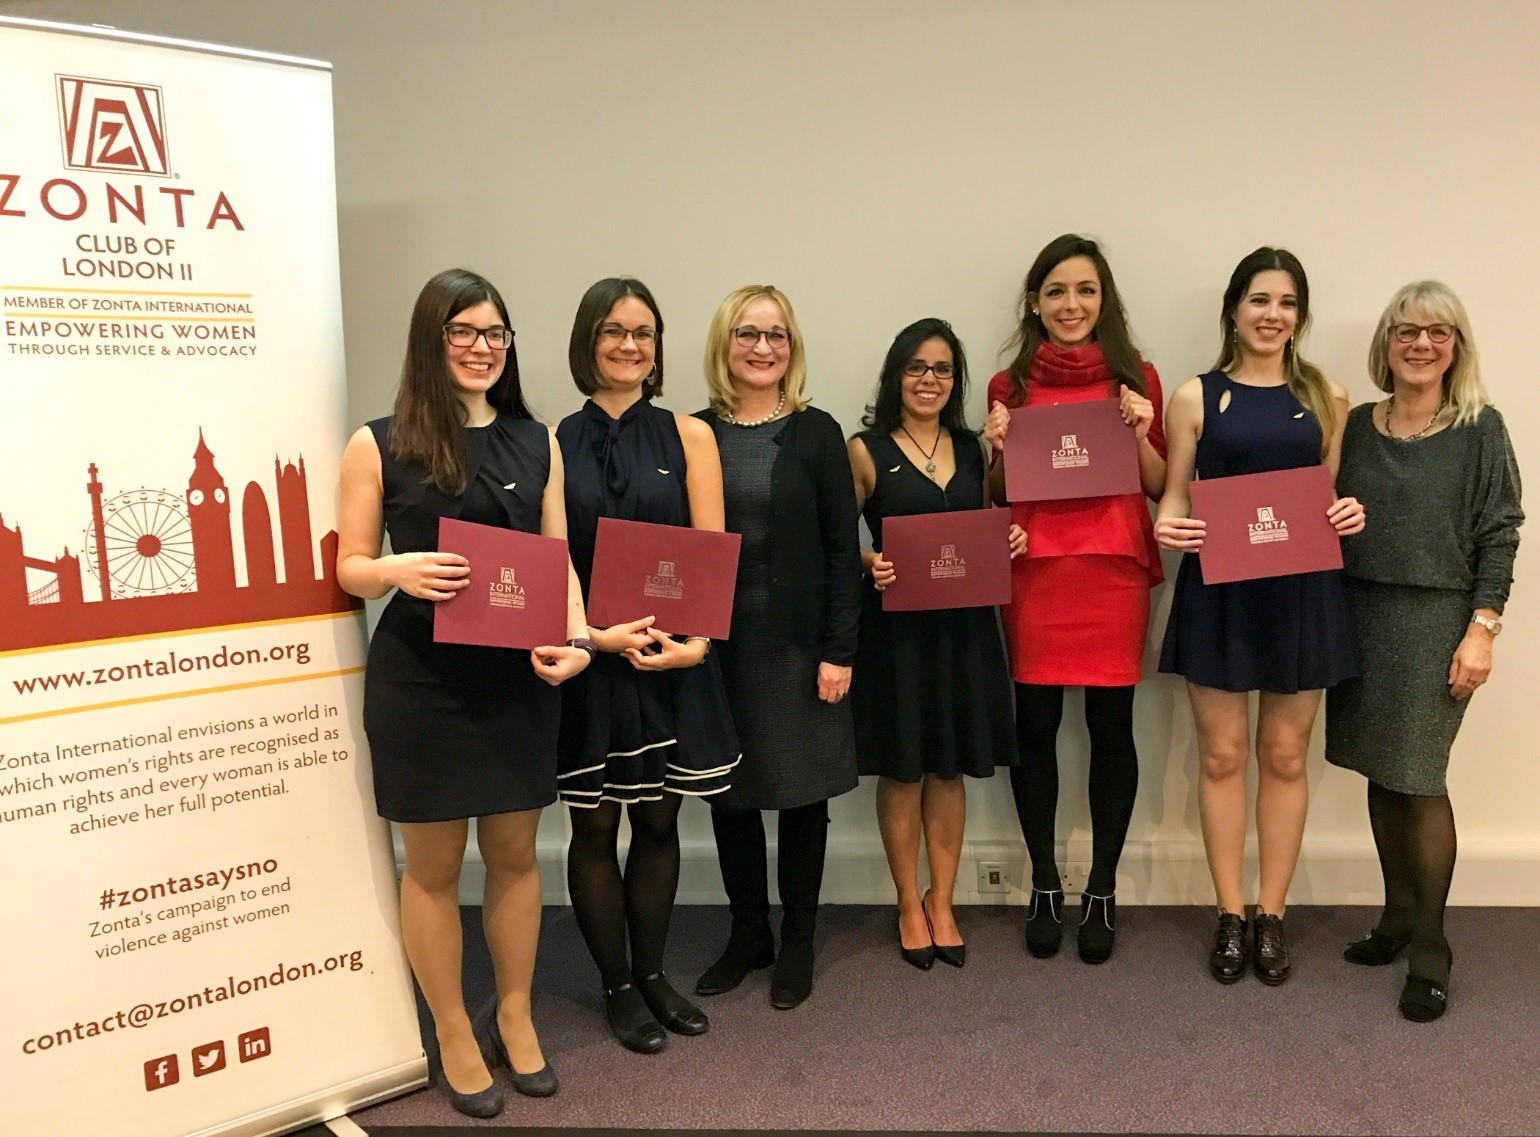 Zonta International Amelia Earhart Fellowship 2019 for Women (Up to US $10,000)